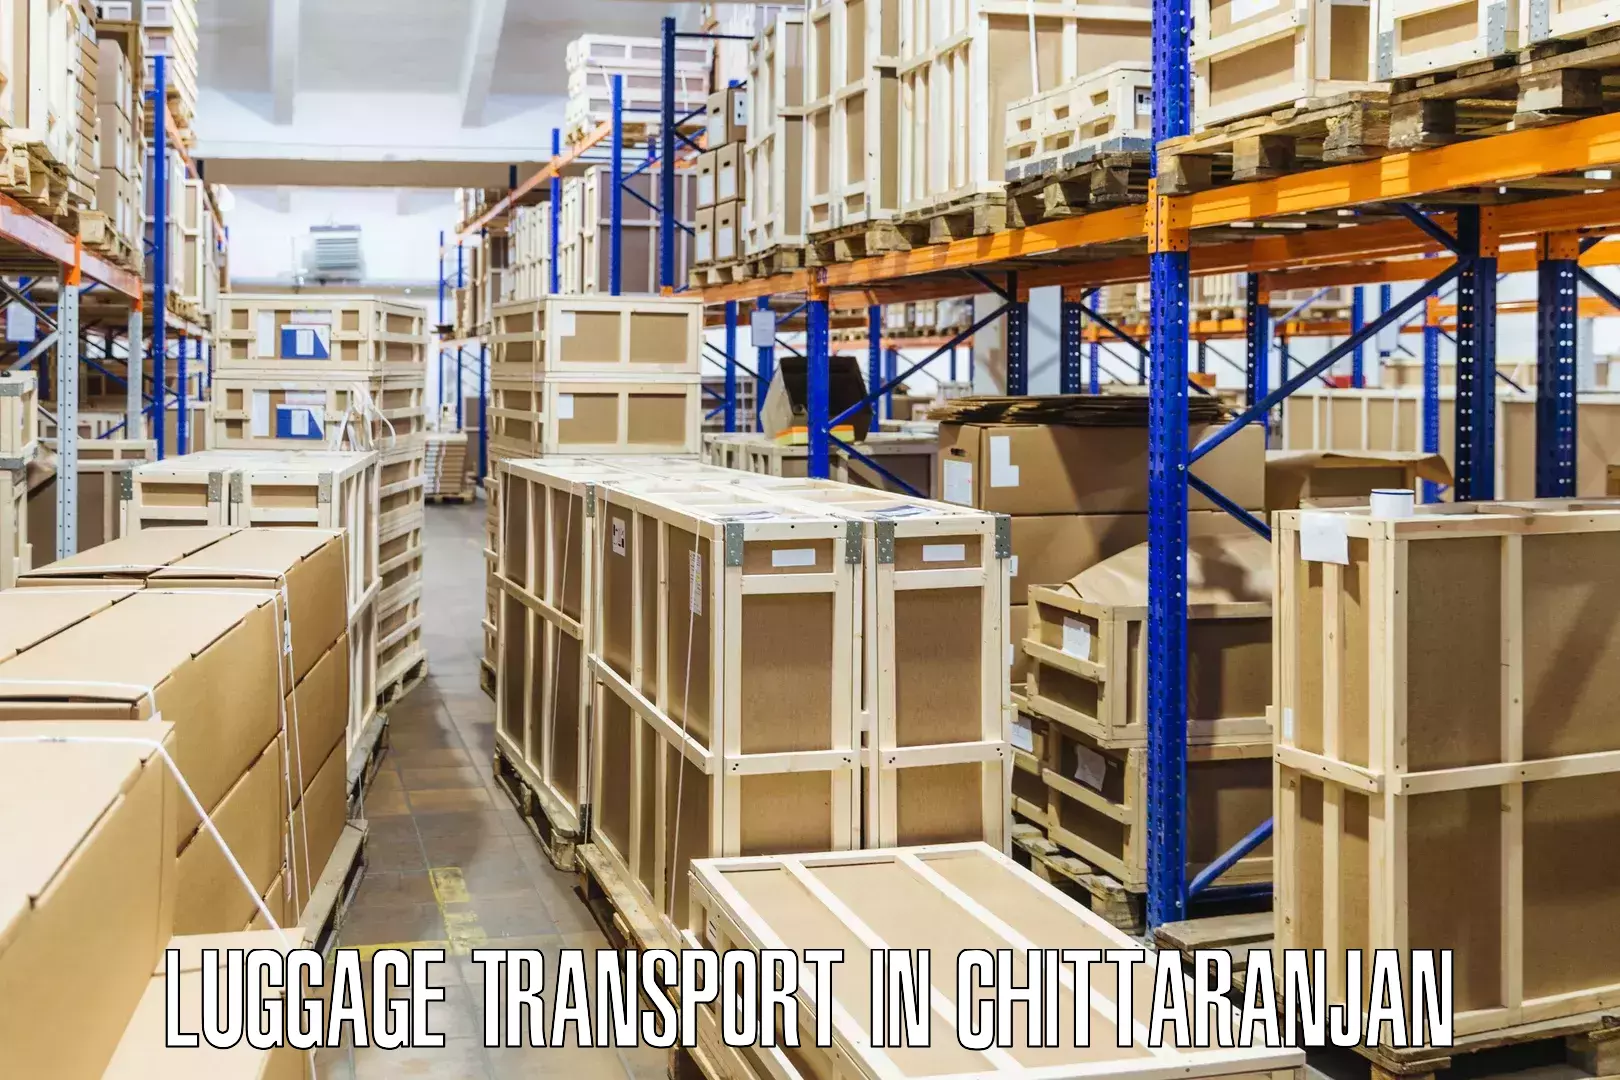 Luggage shipment processing in Chittaranjan